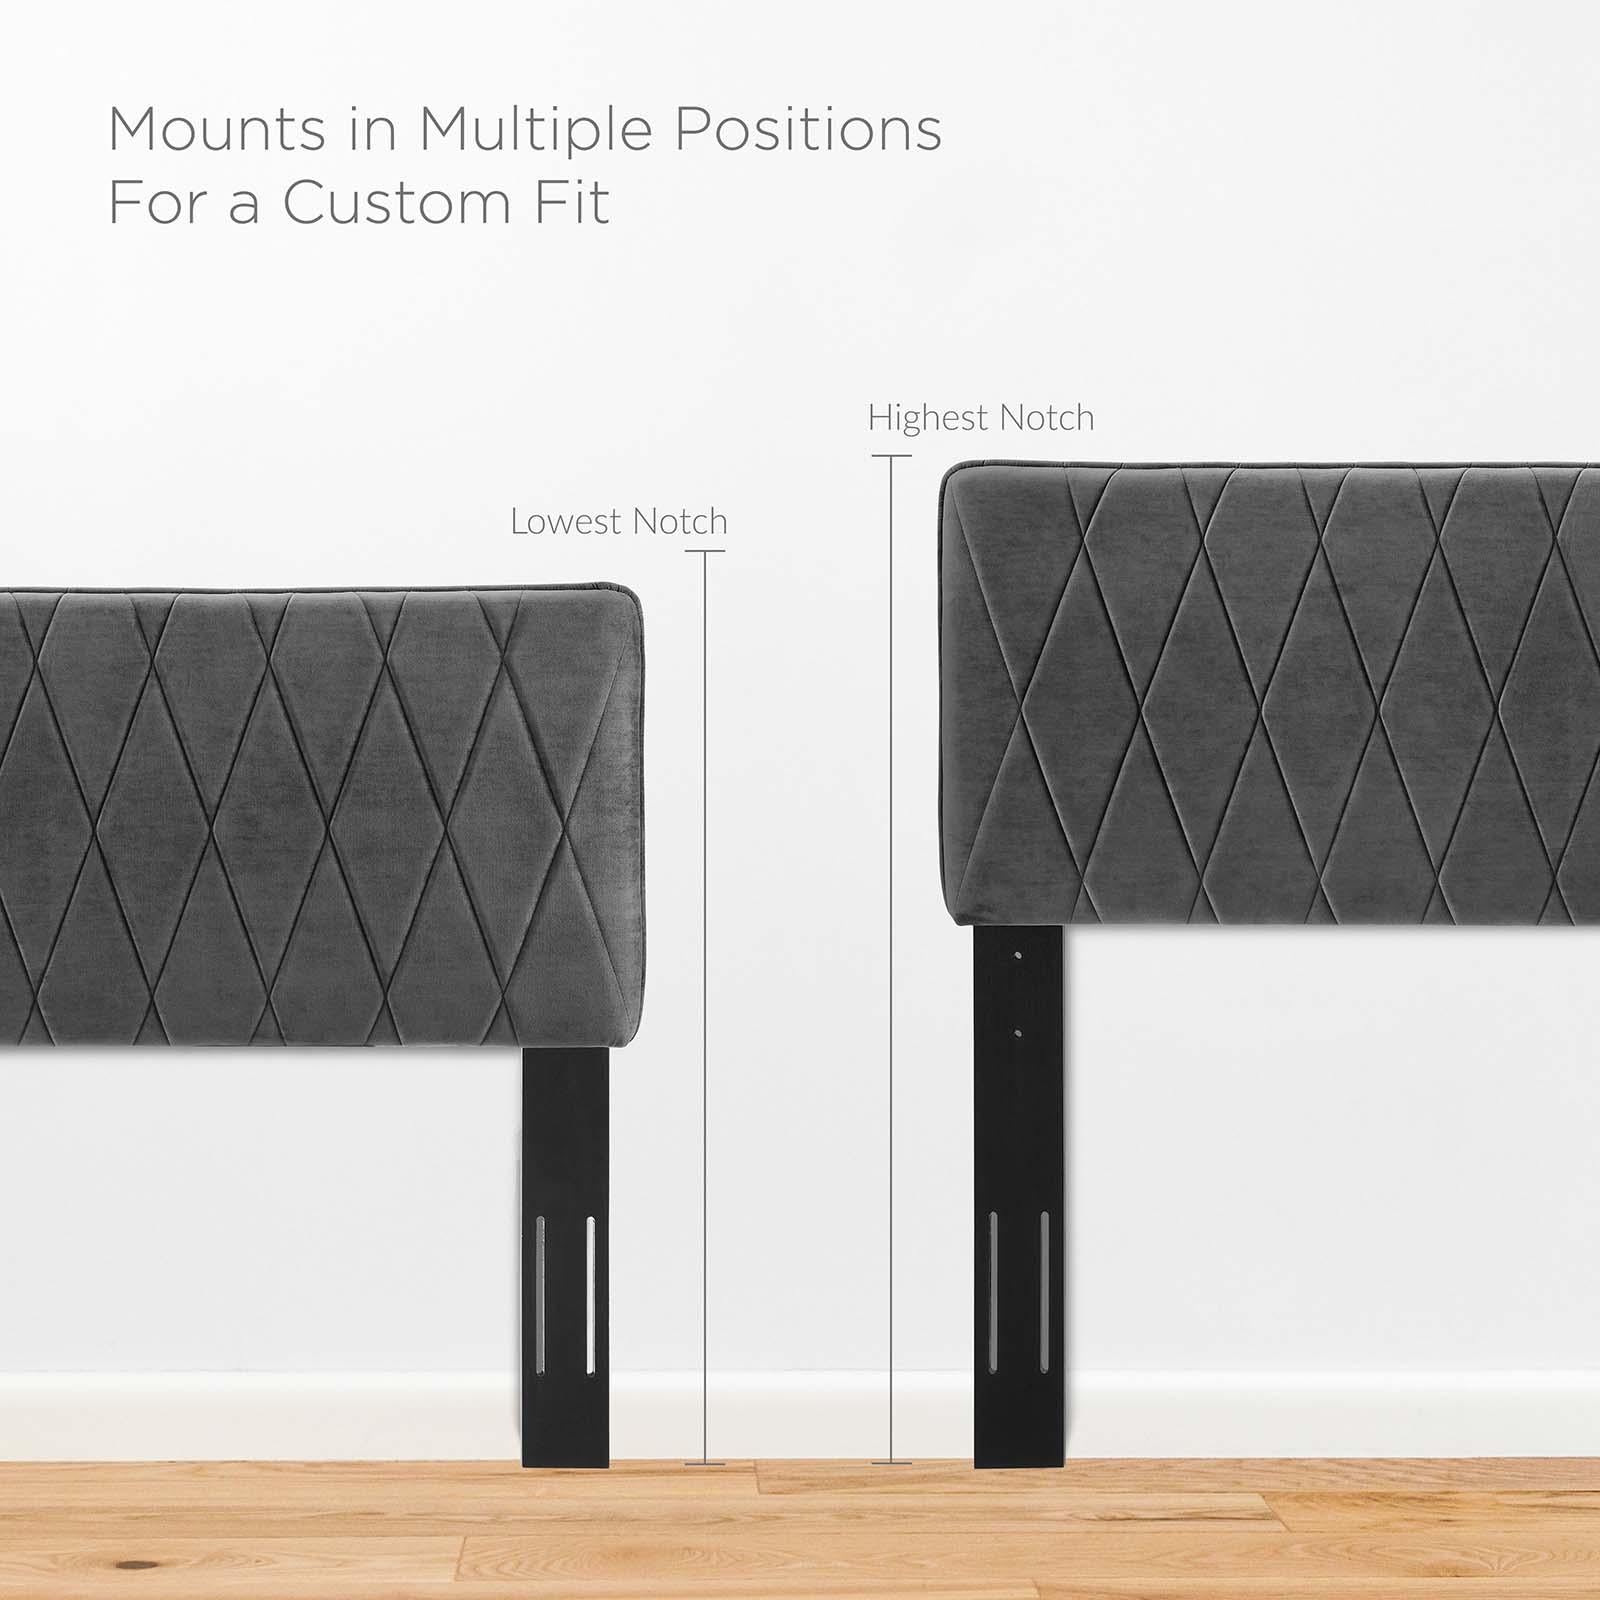 Modway Furniture Modern Phillipa Performance Velvet Twin Platform Bed - MOD-6900